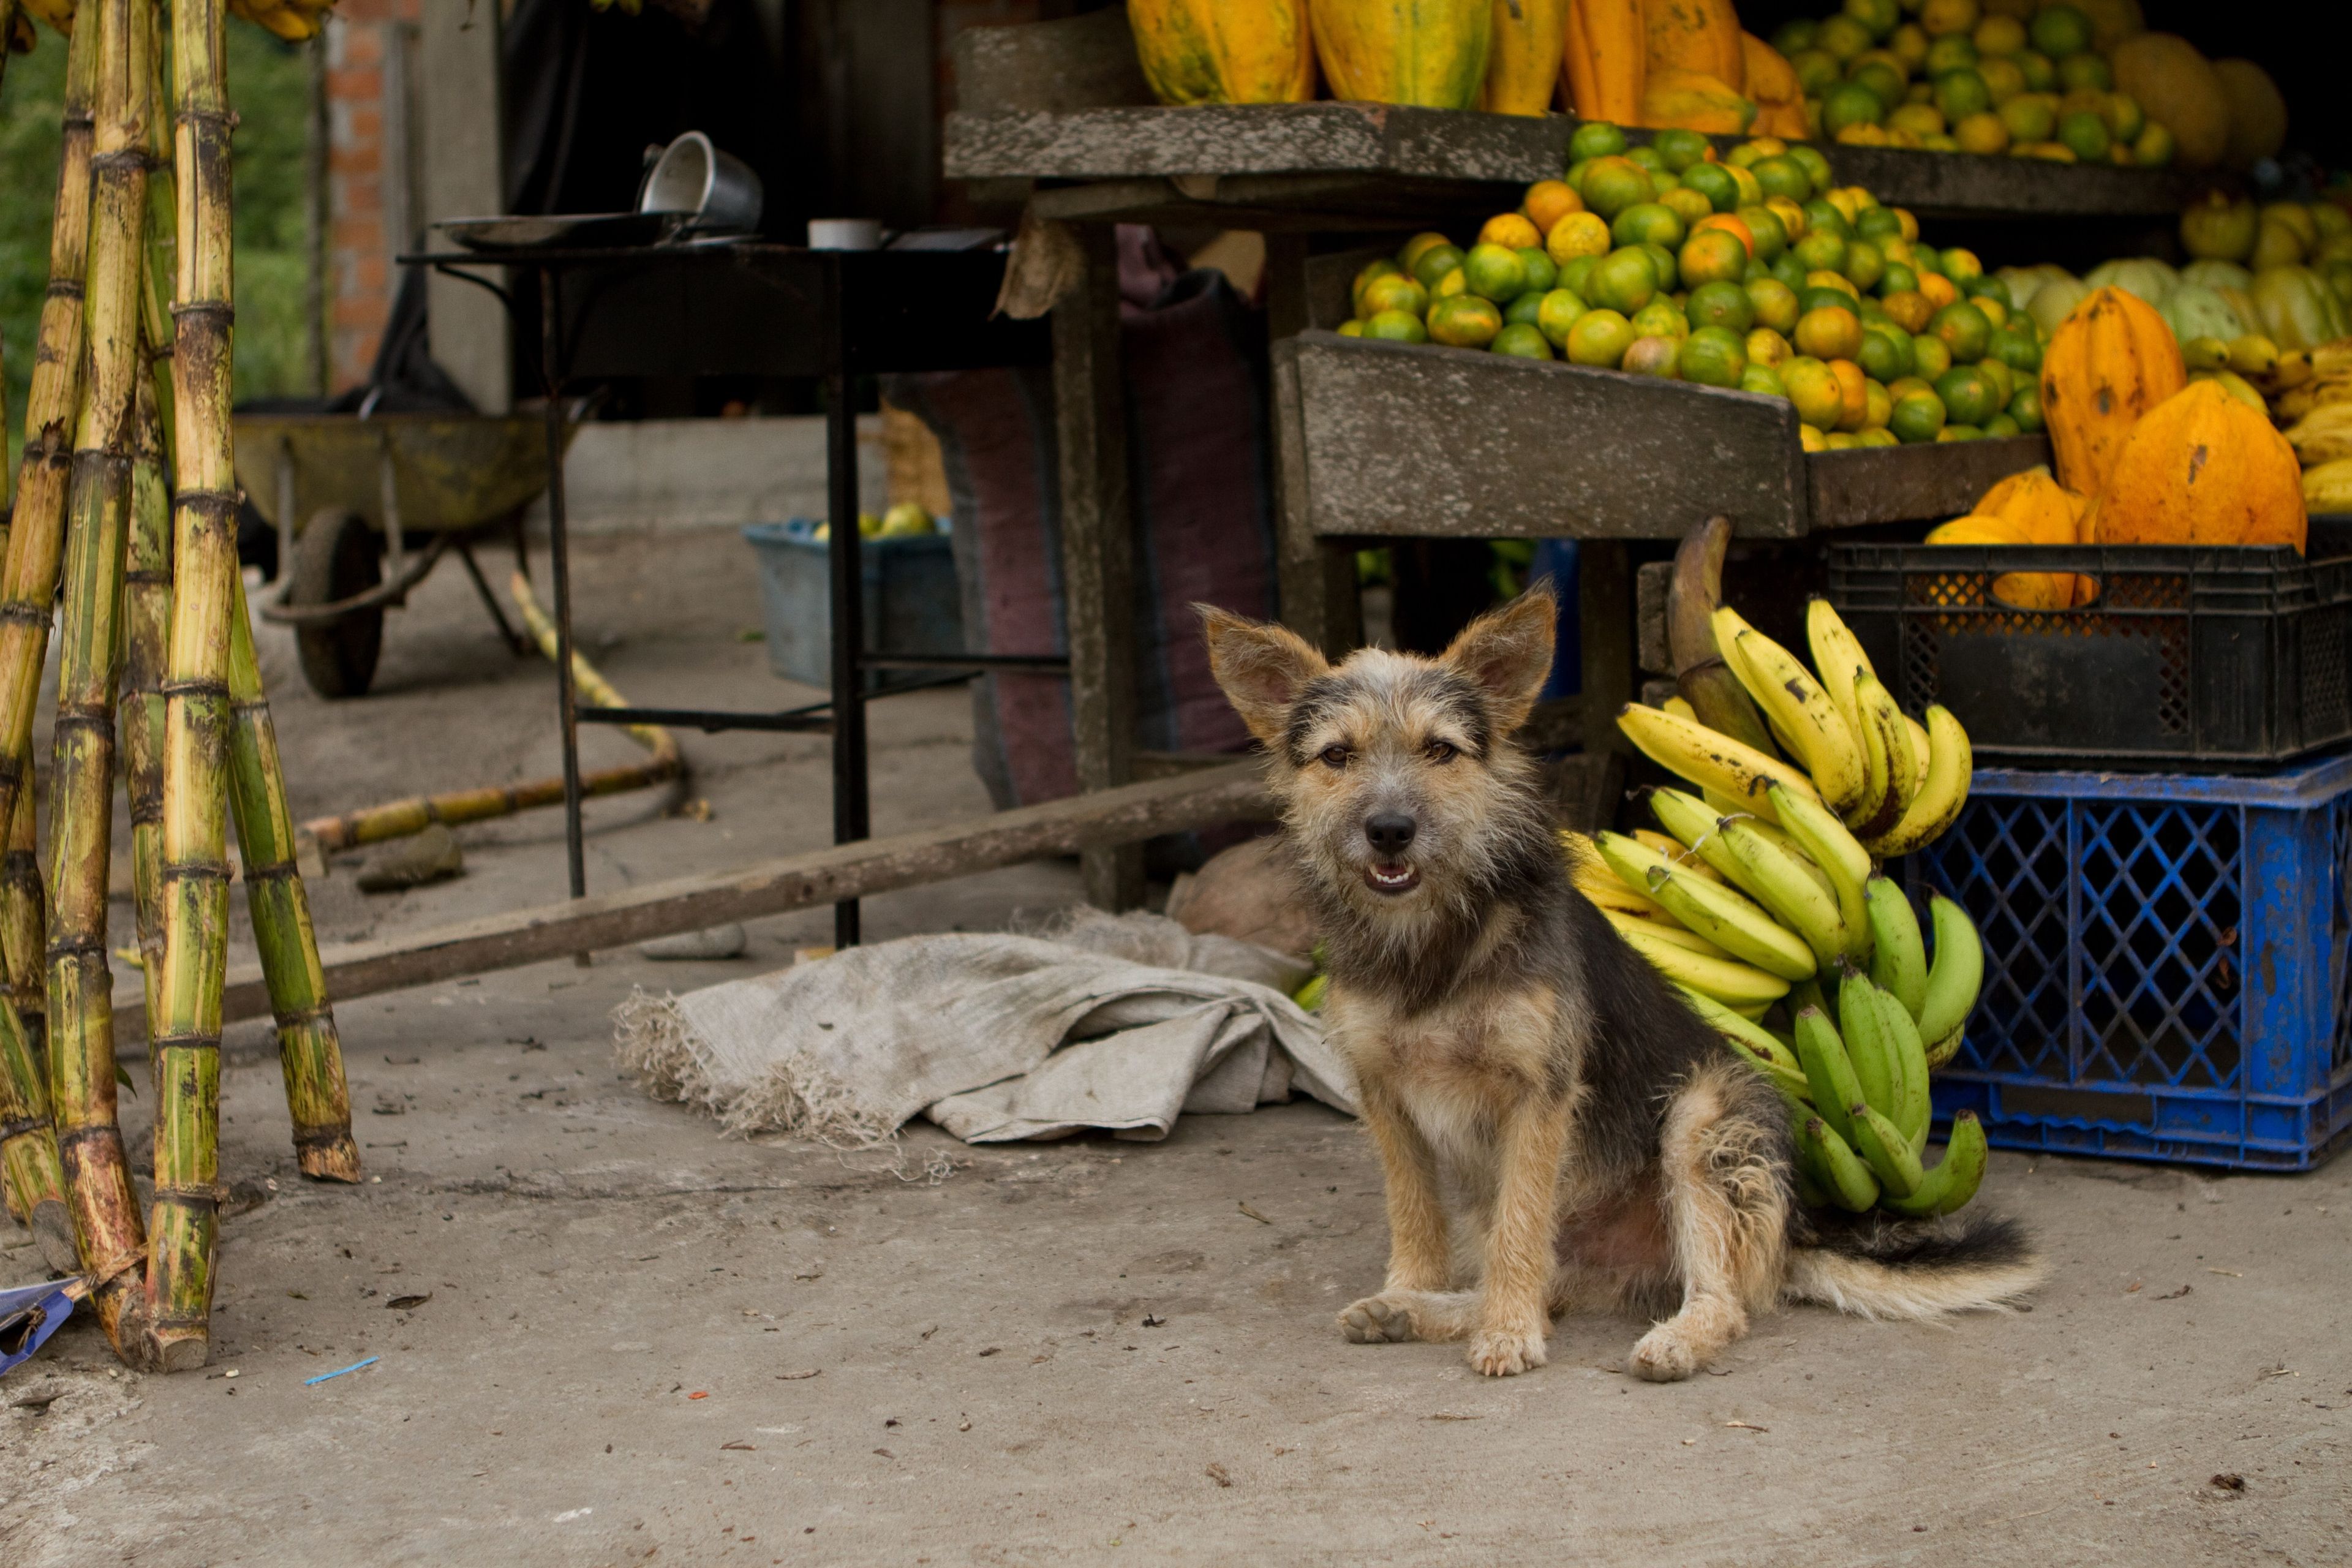 A dog sits near a fruit market.